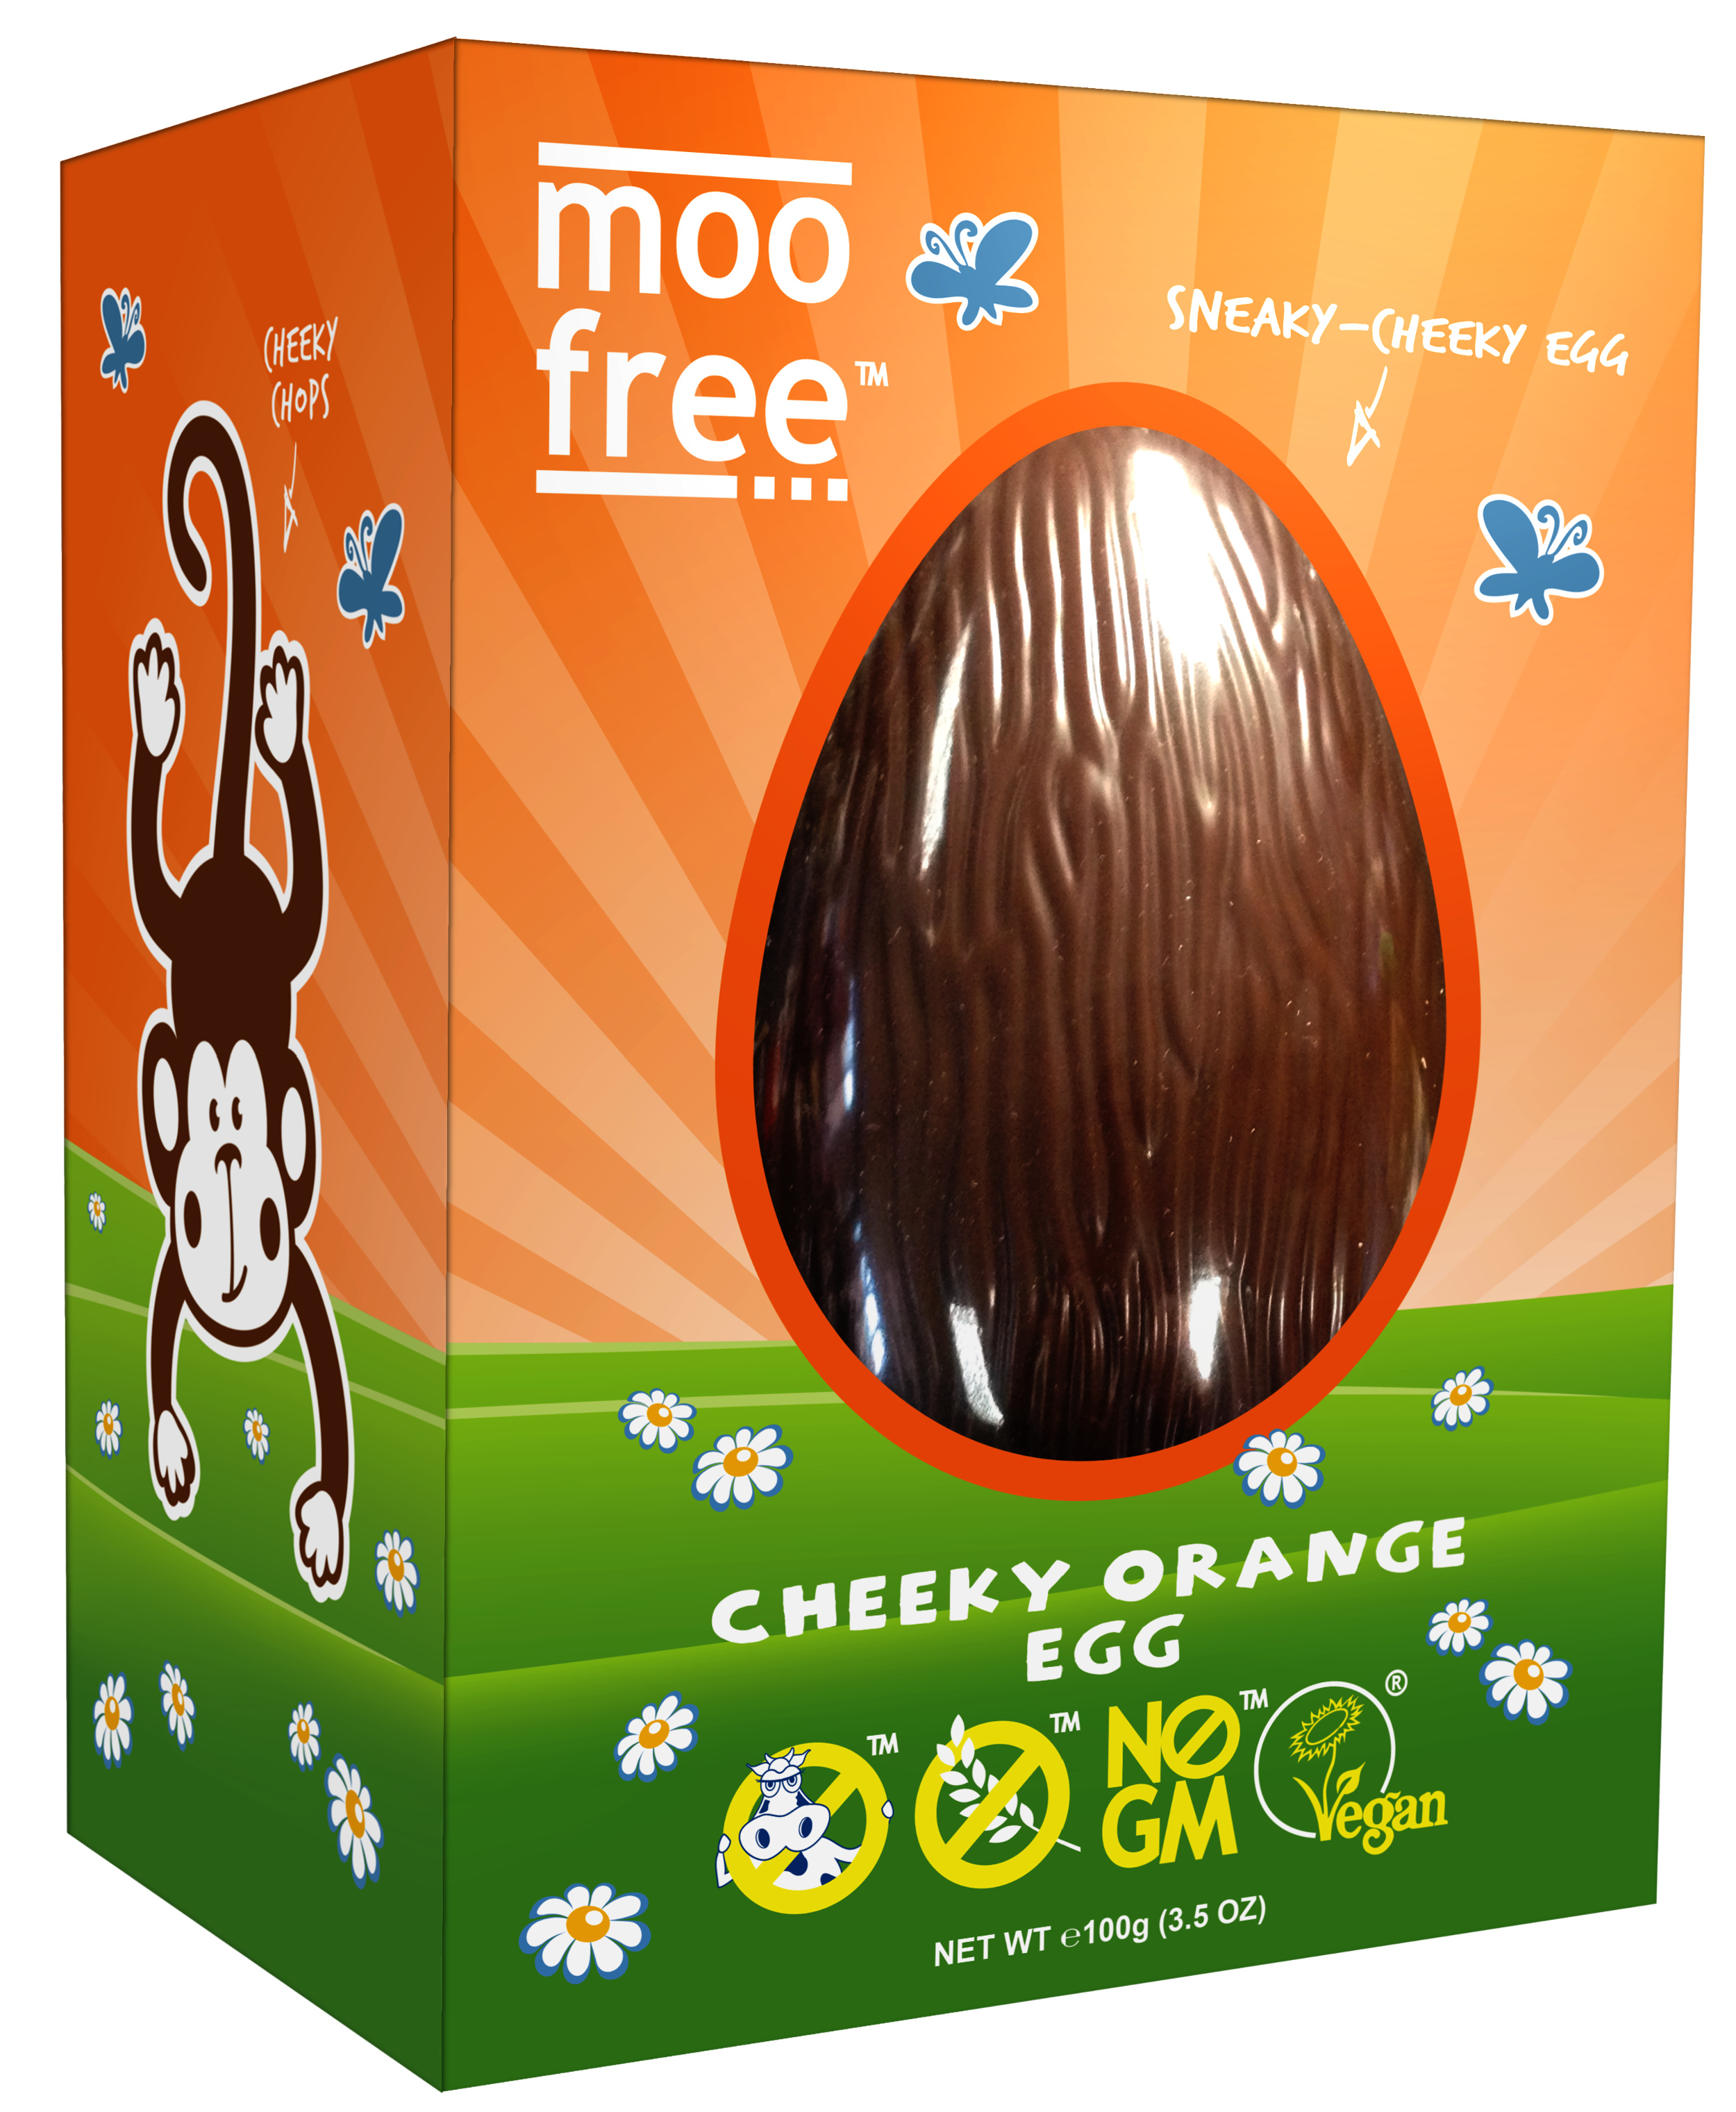 moo-free-orange-easter-egg-hi-res.jpg